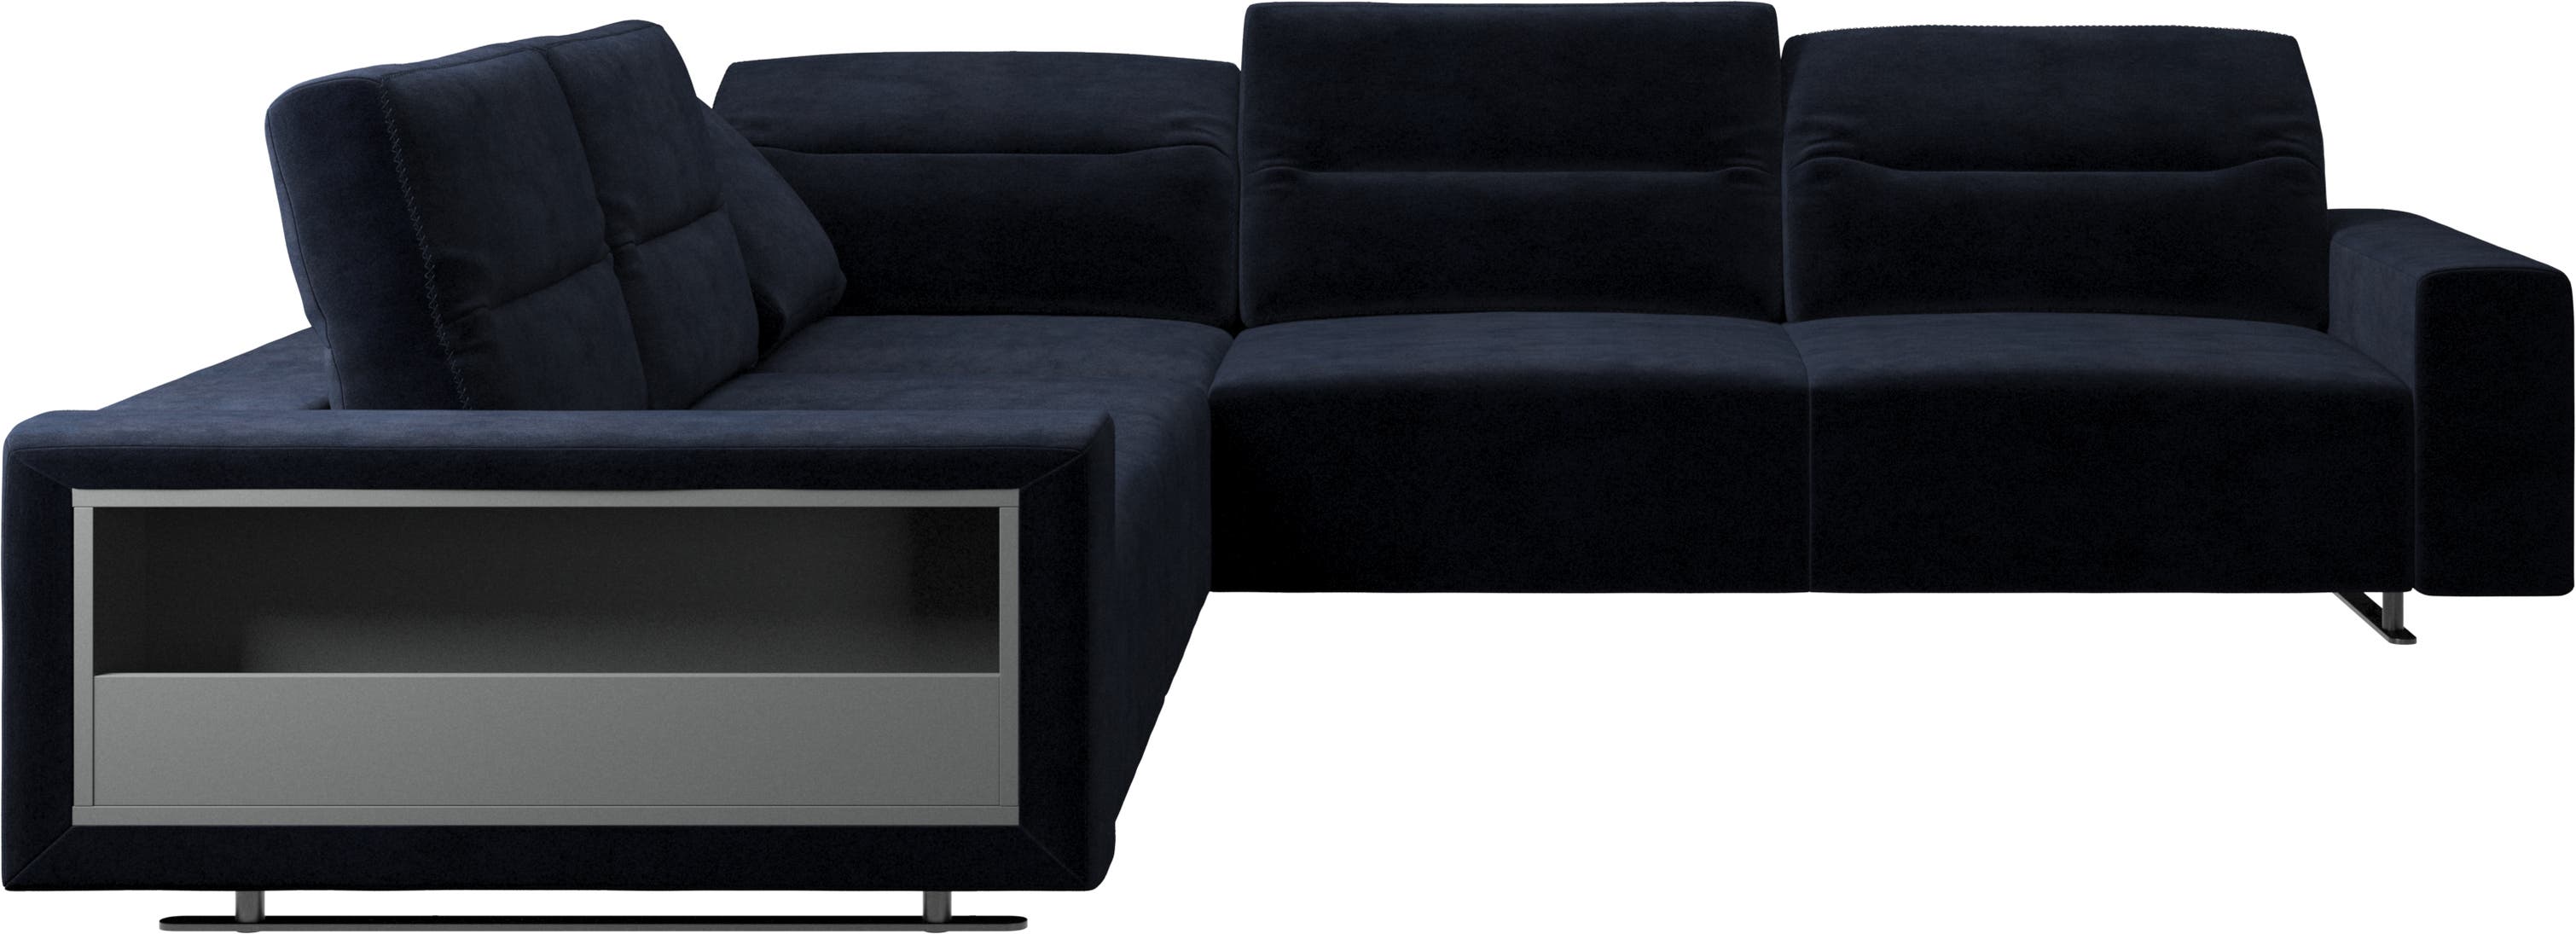 Hampton corner sofa with adjustable back and storage on left side